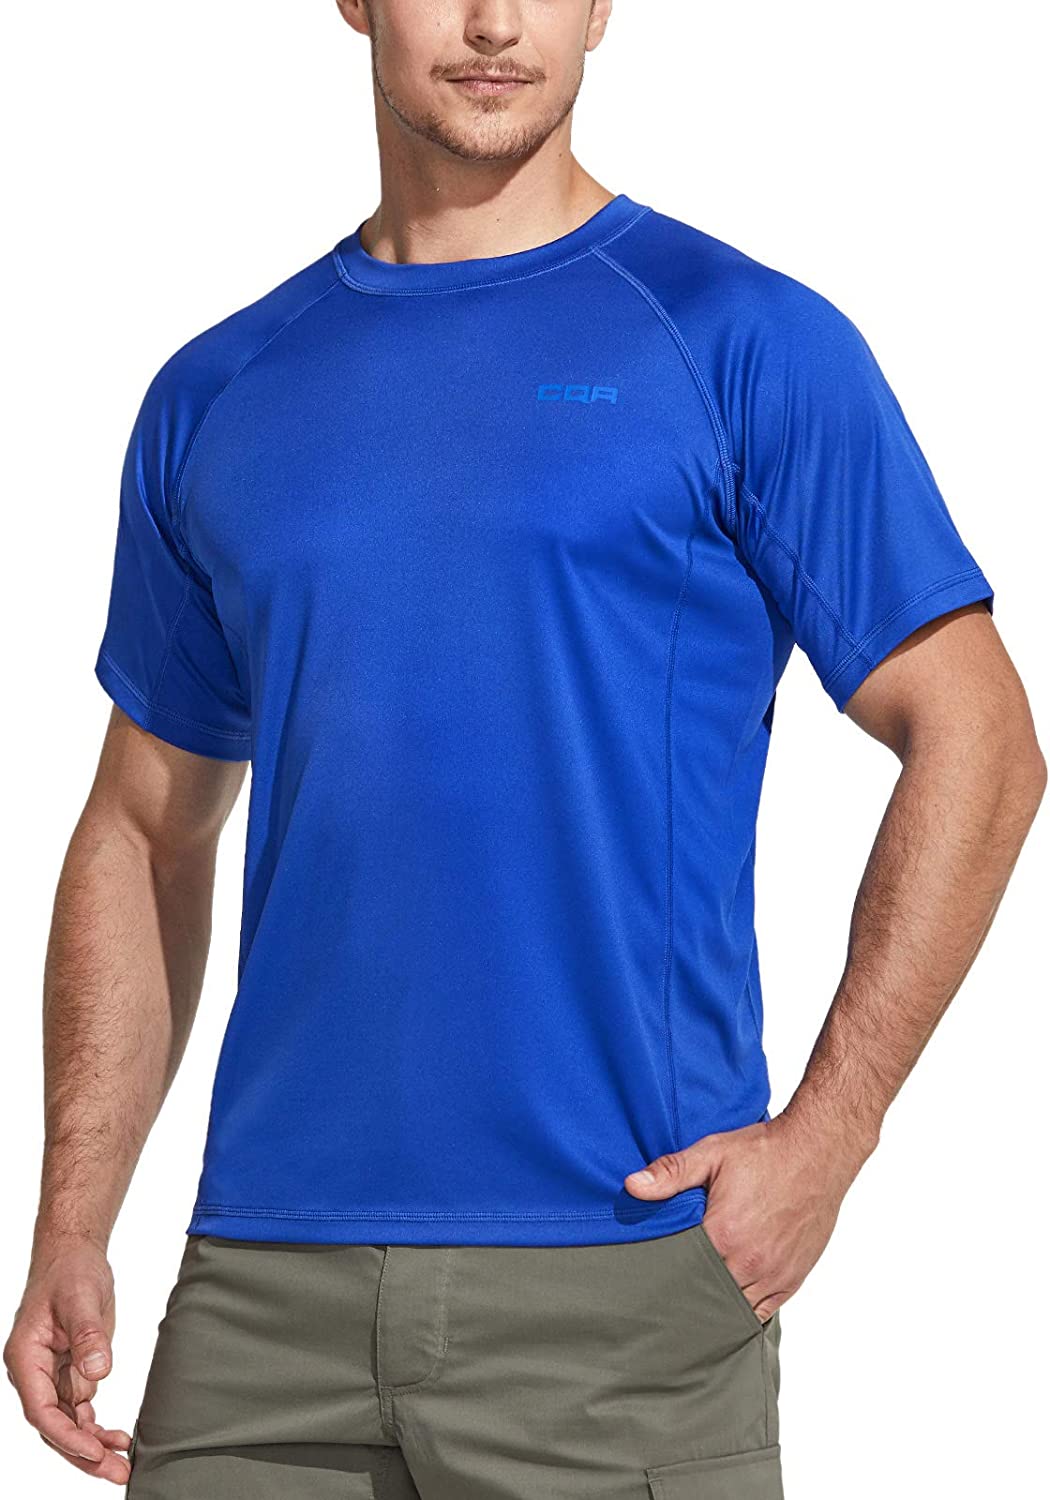  CQR Men's UPF 50+ UV Sun Protection Outdoor Shirts